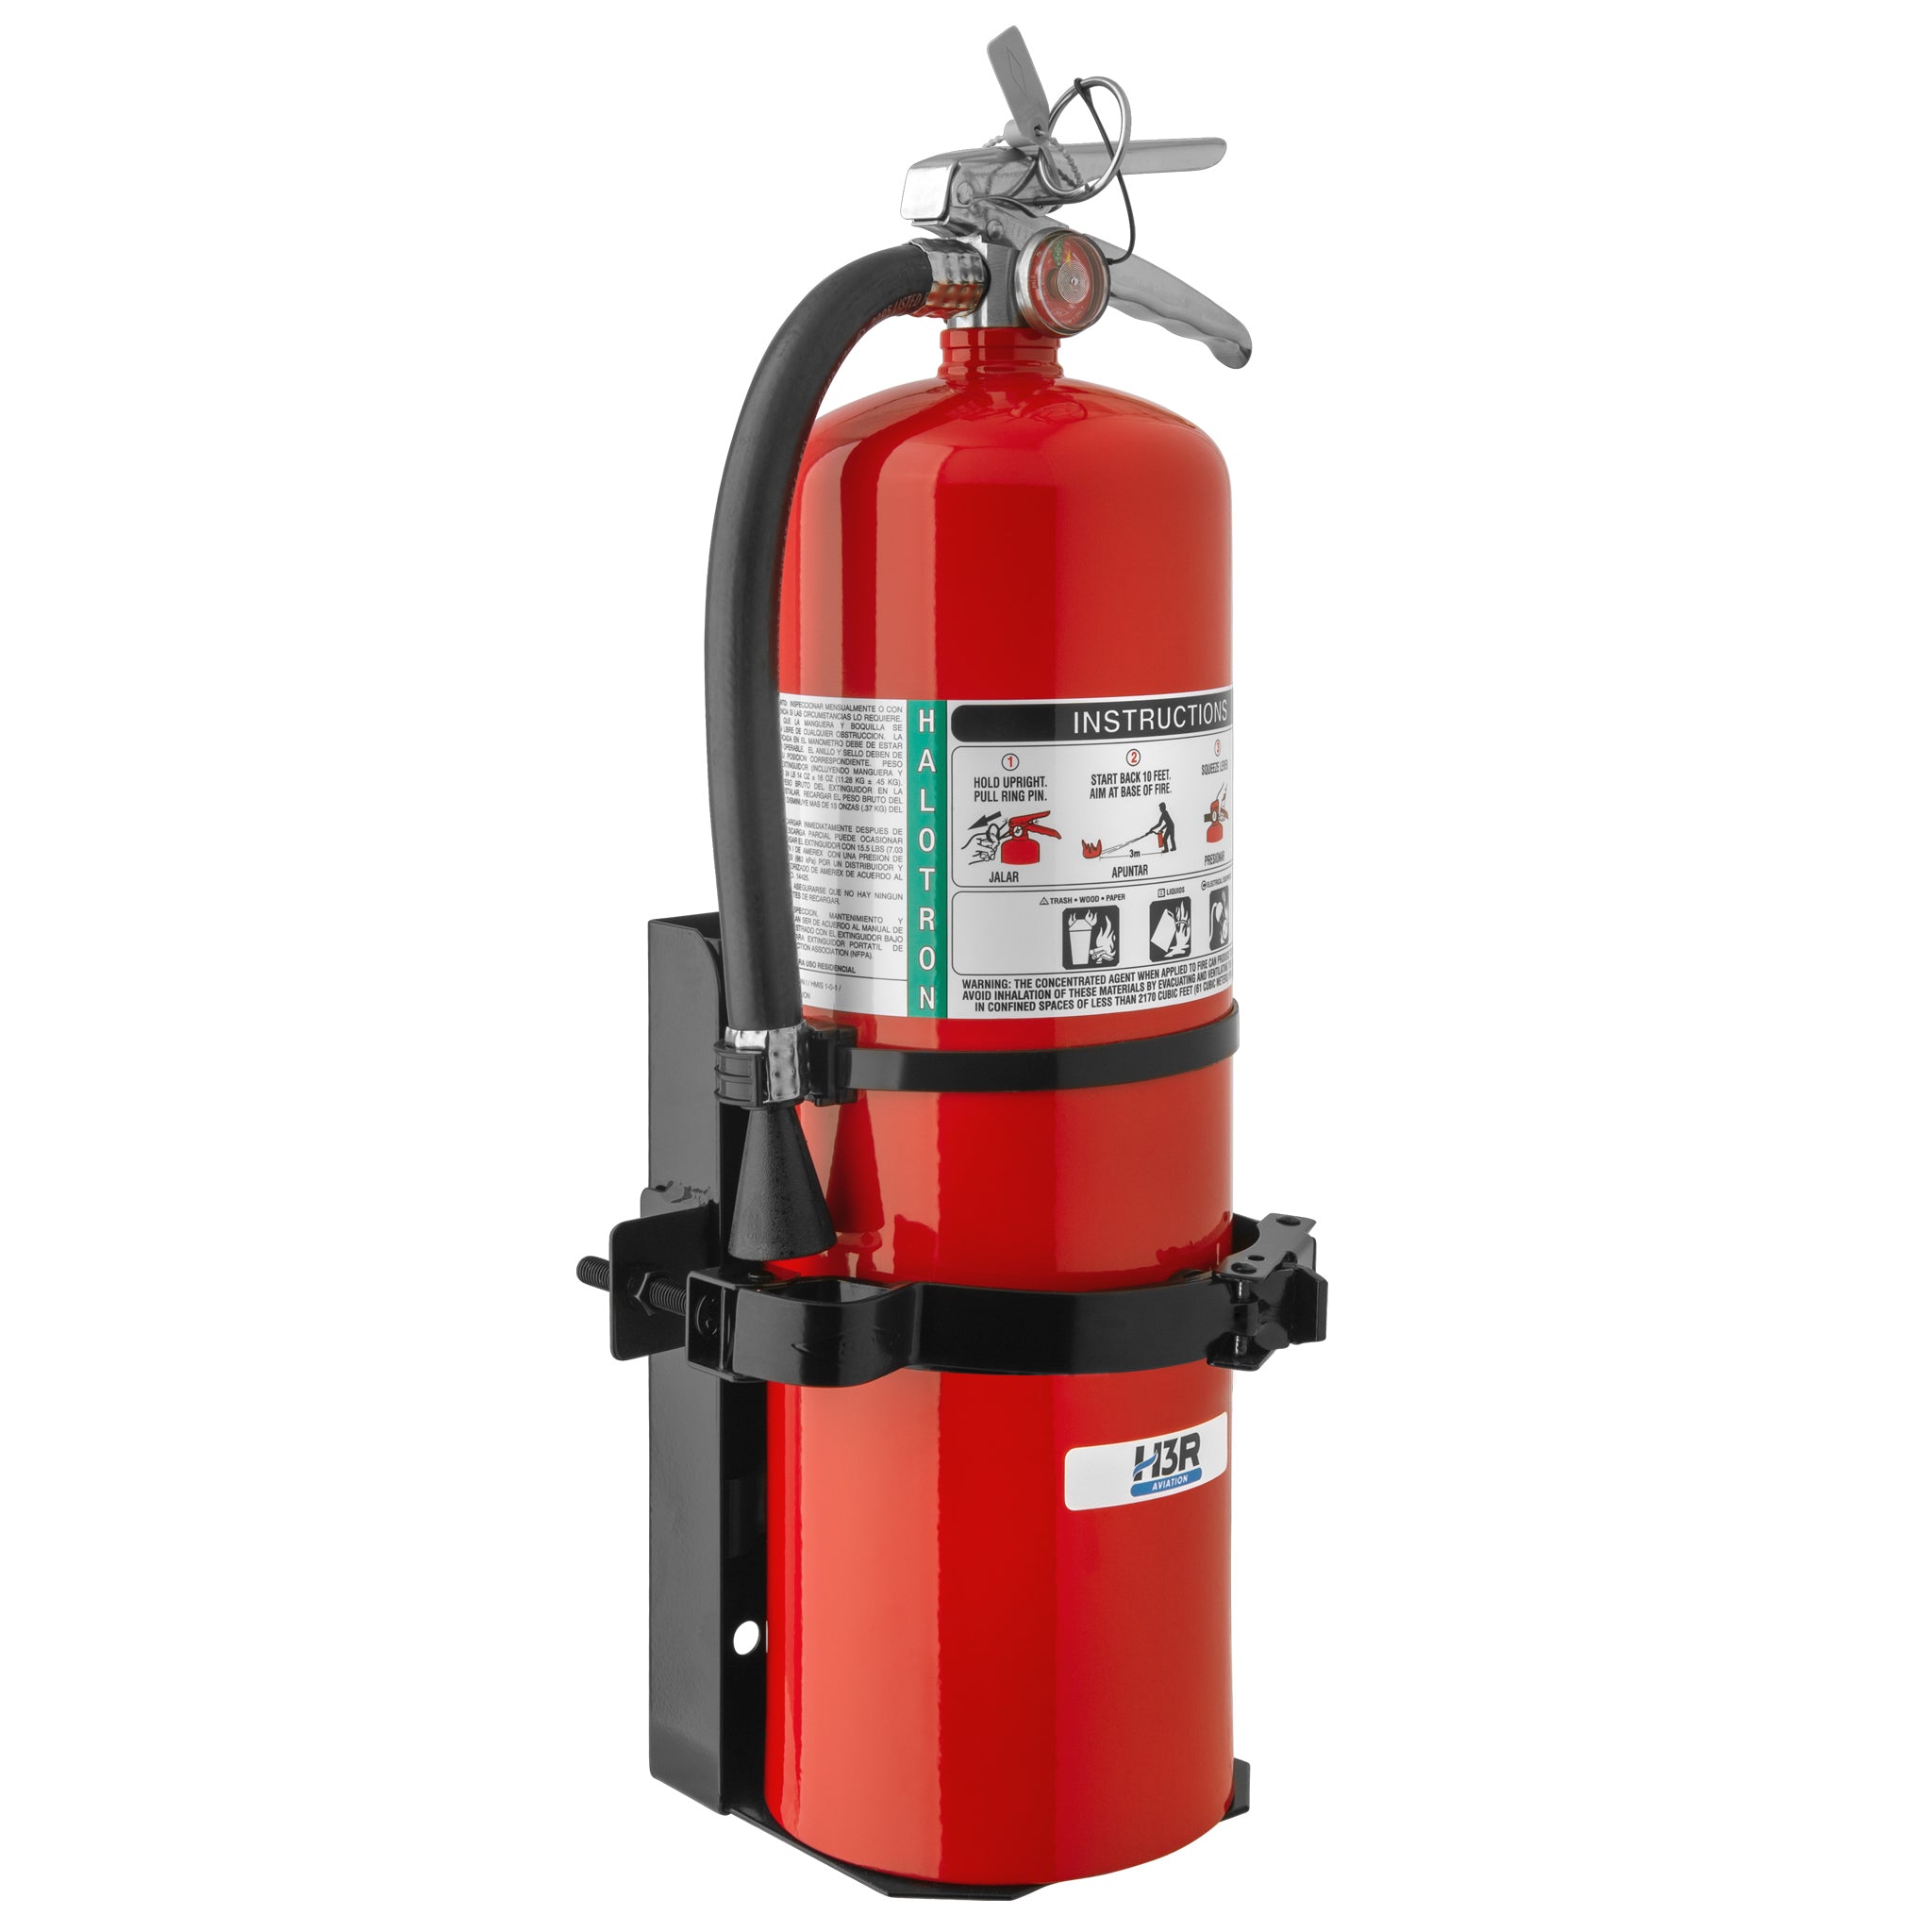 397 - 11 lb. Halotron 1 Fire Extinguisher